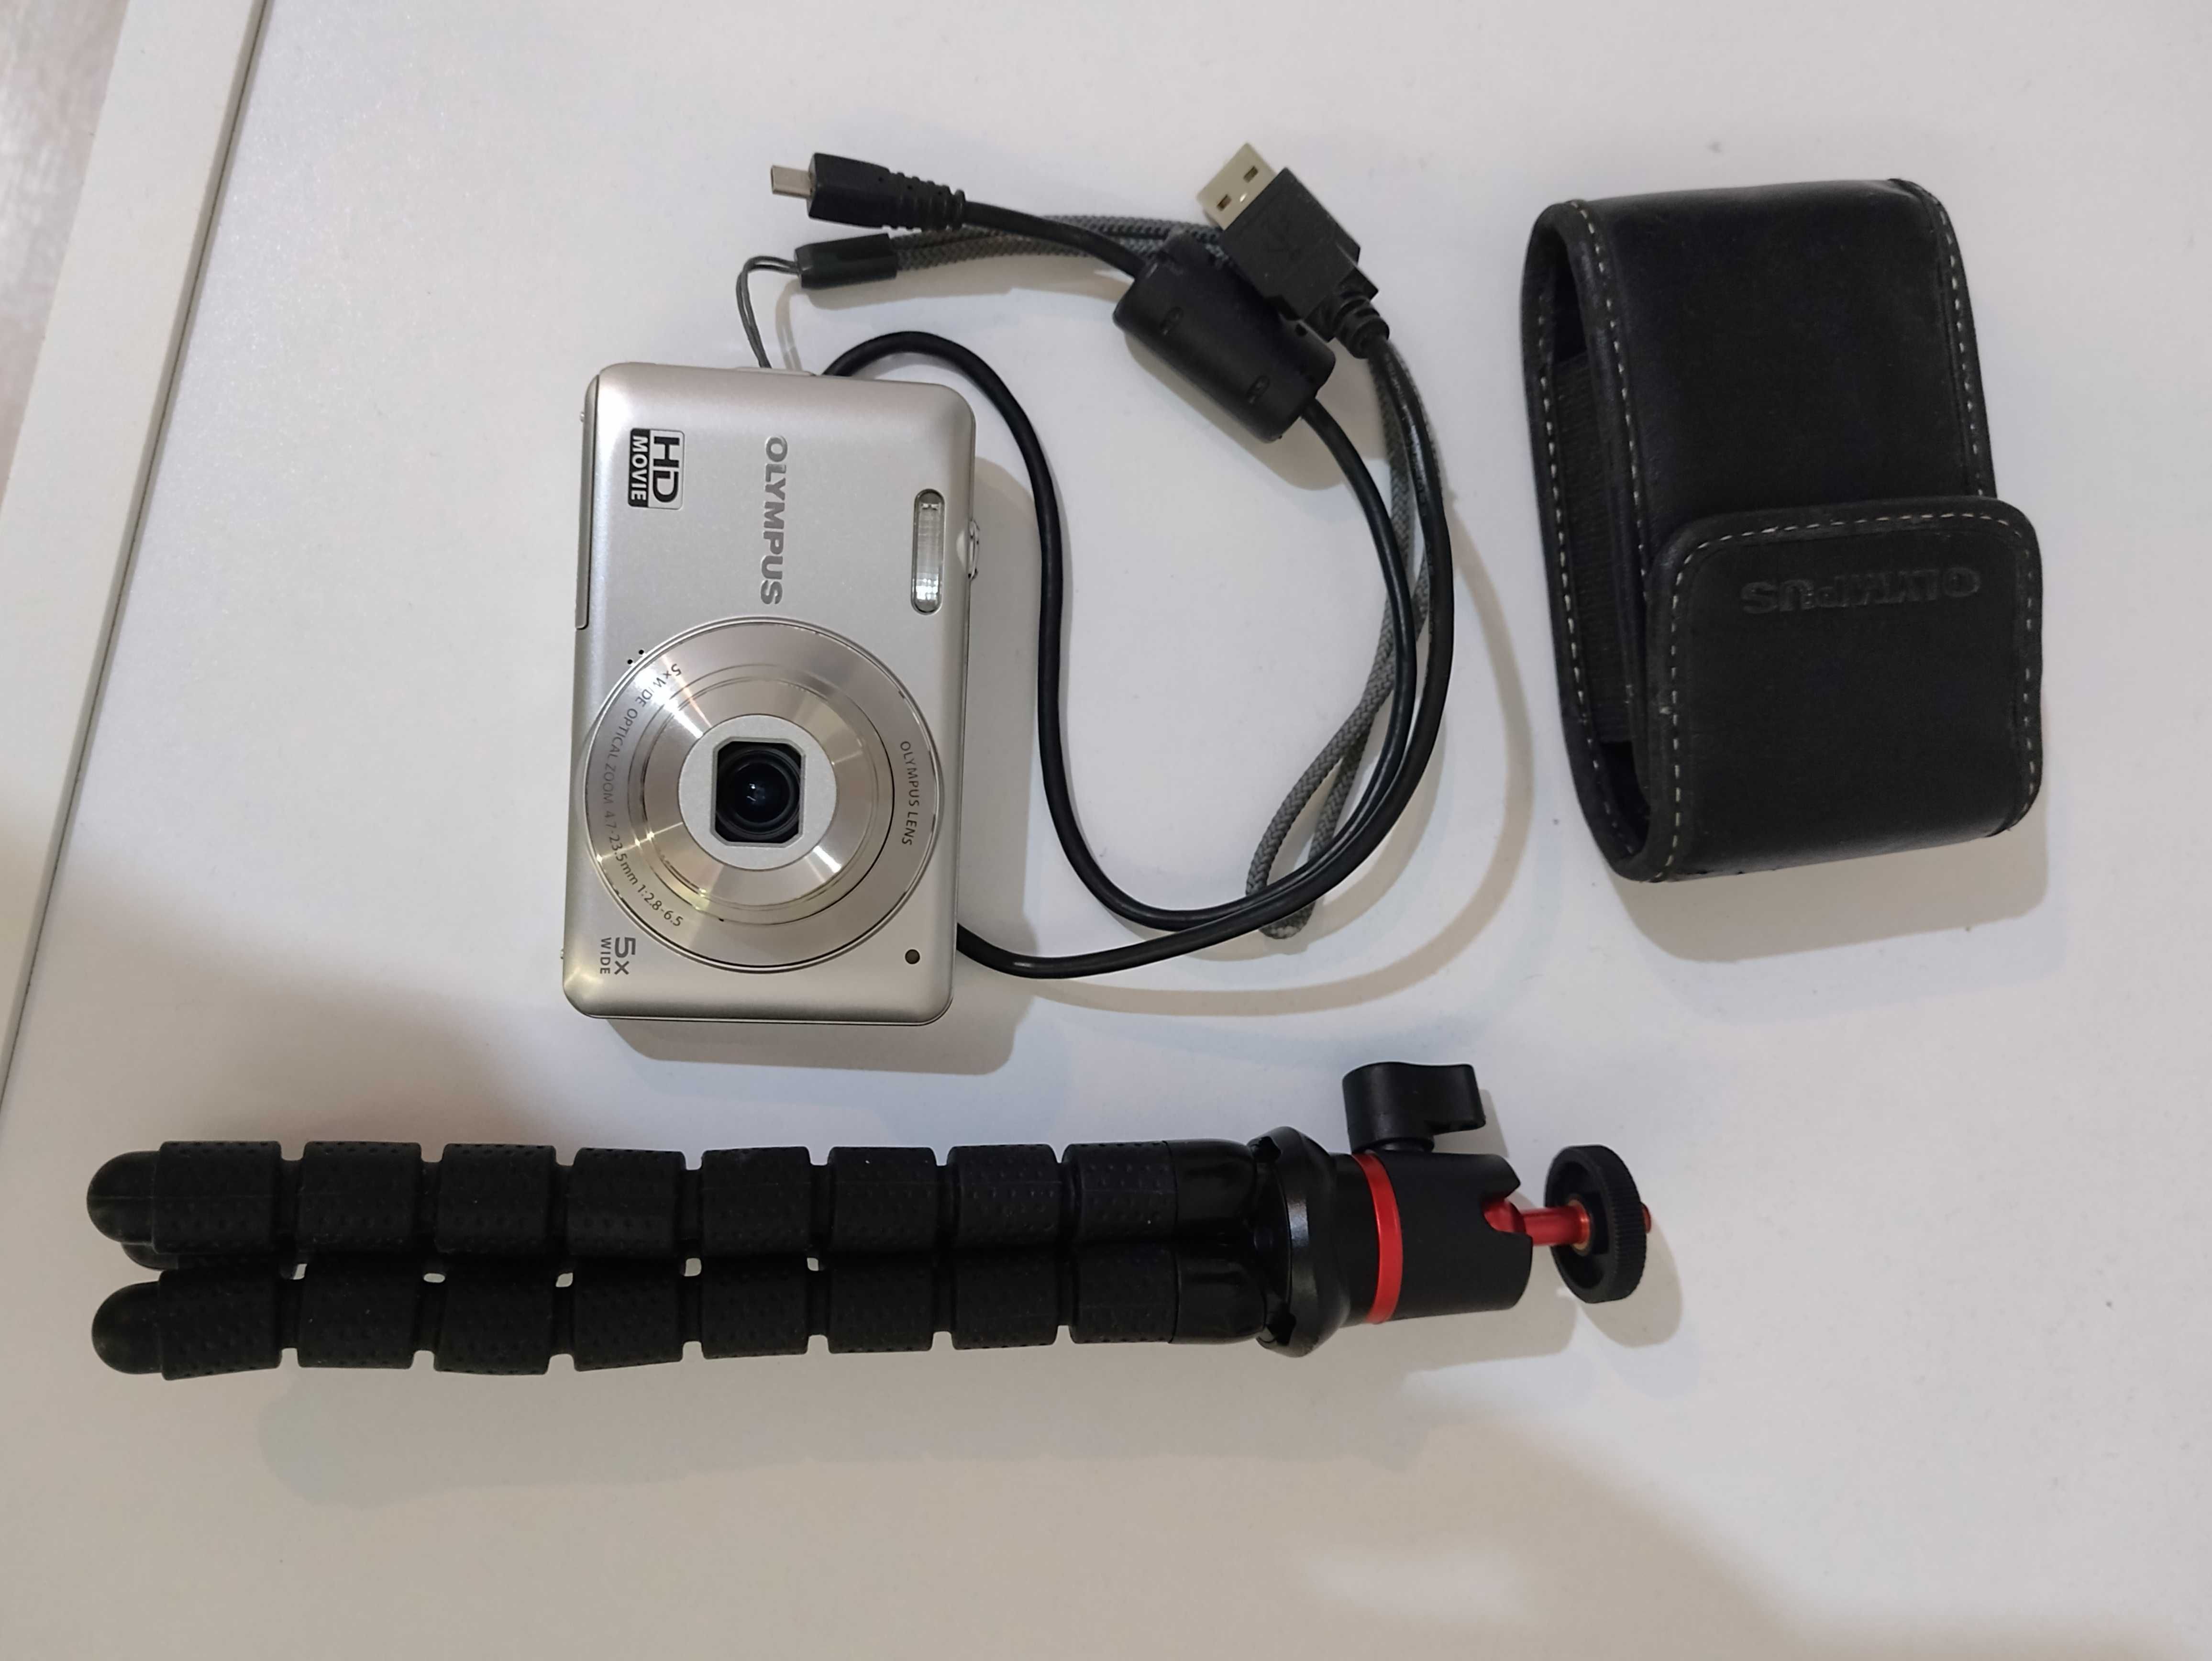 Camera foto Olympus+selfie stick adaptabil prin infiletare+accesorii